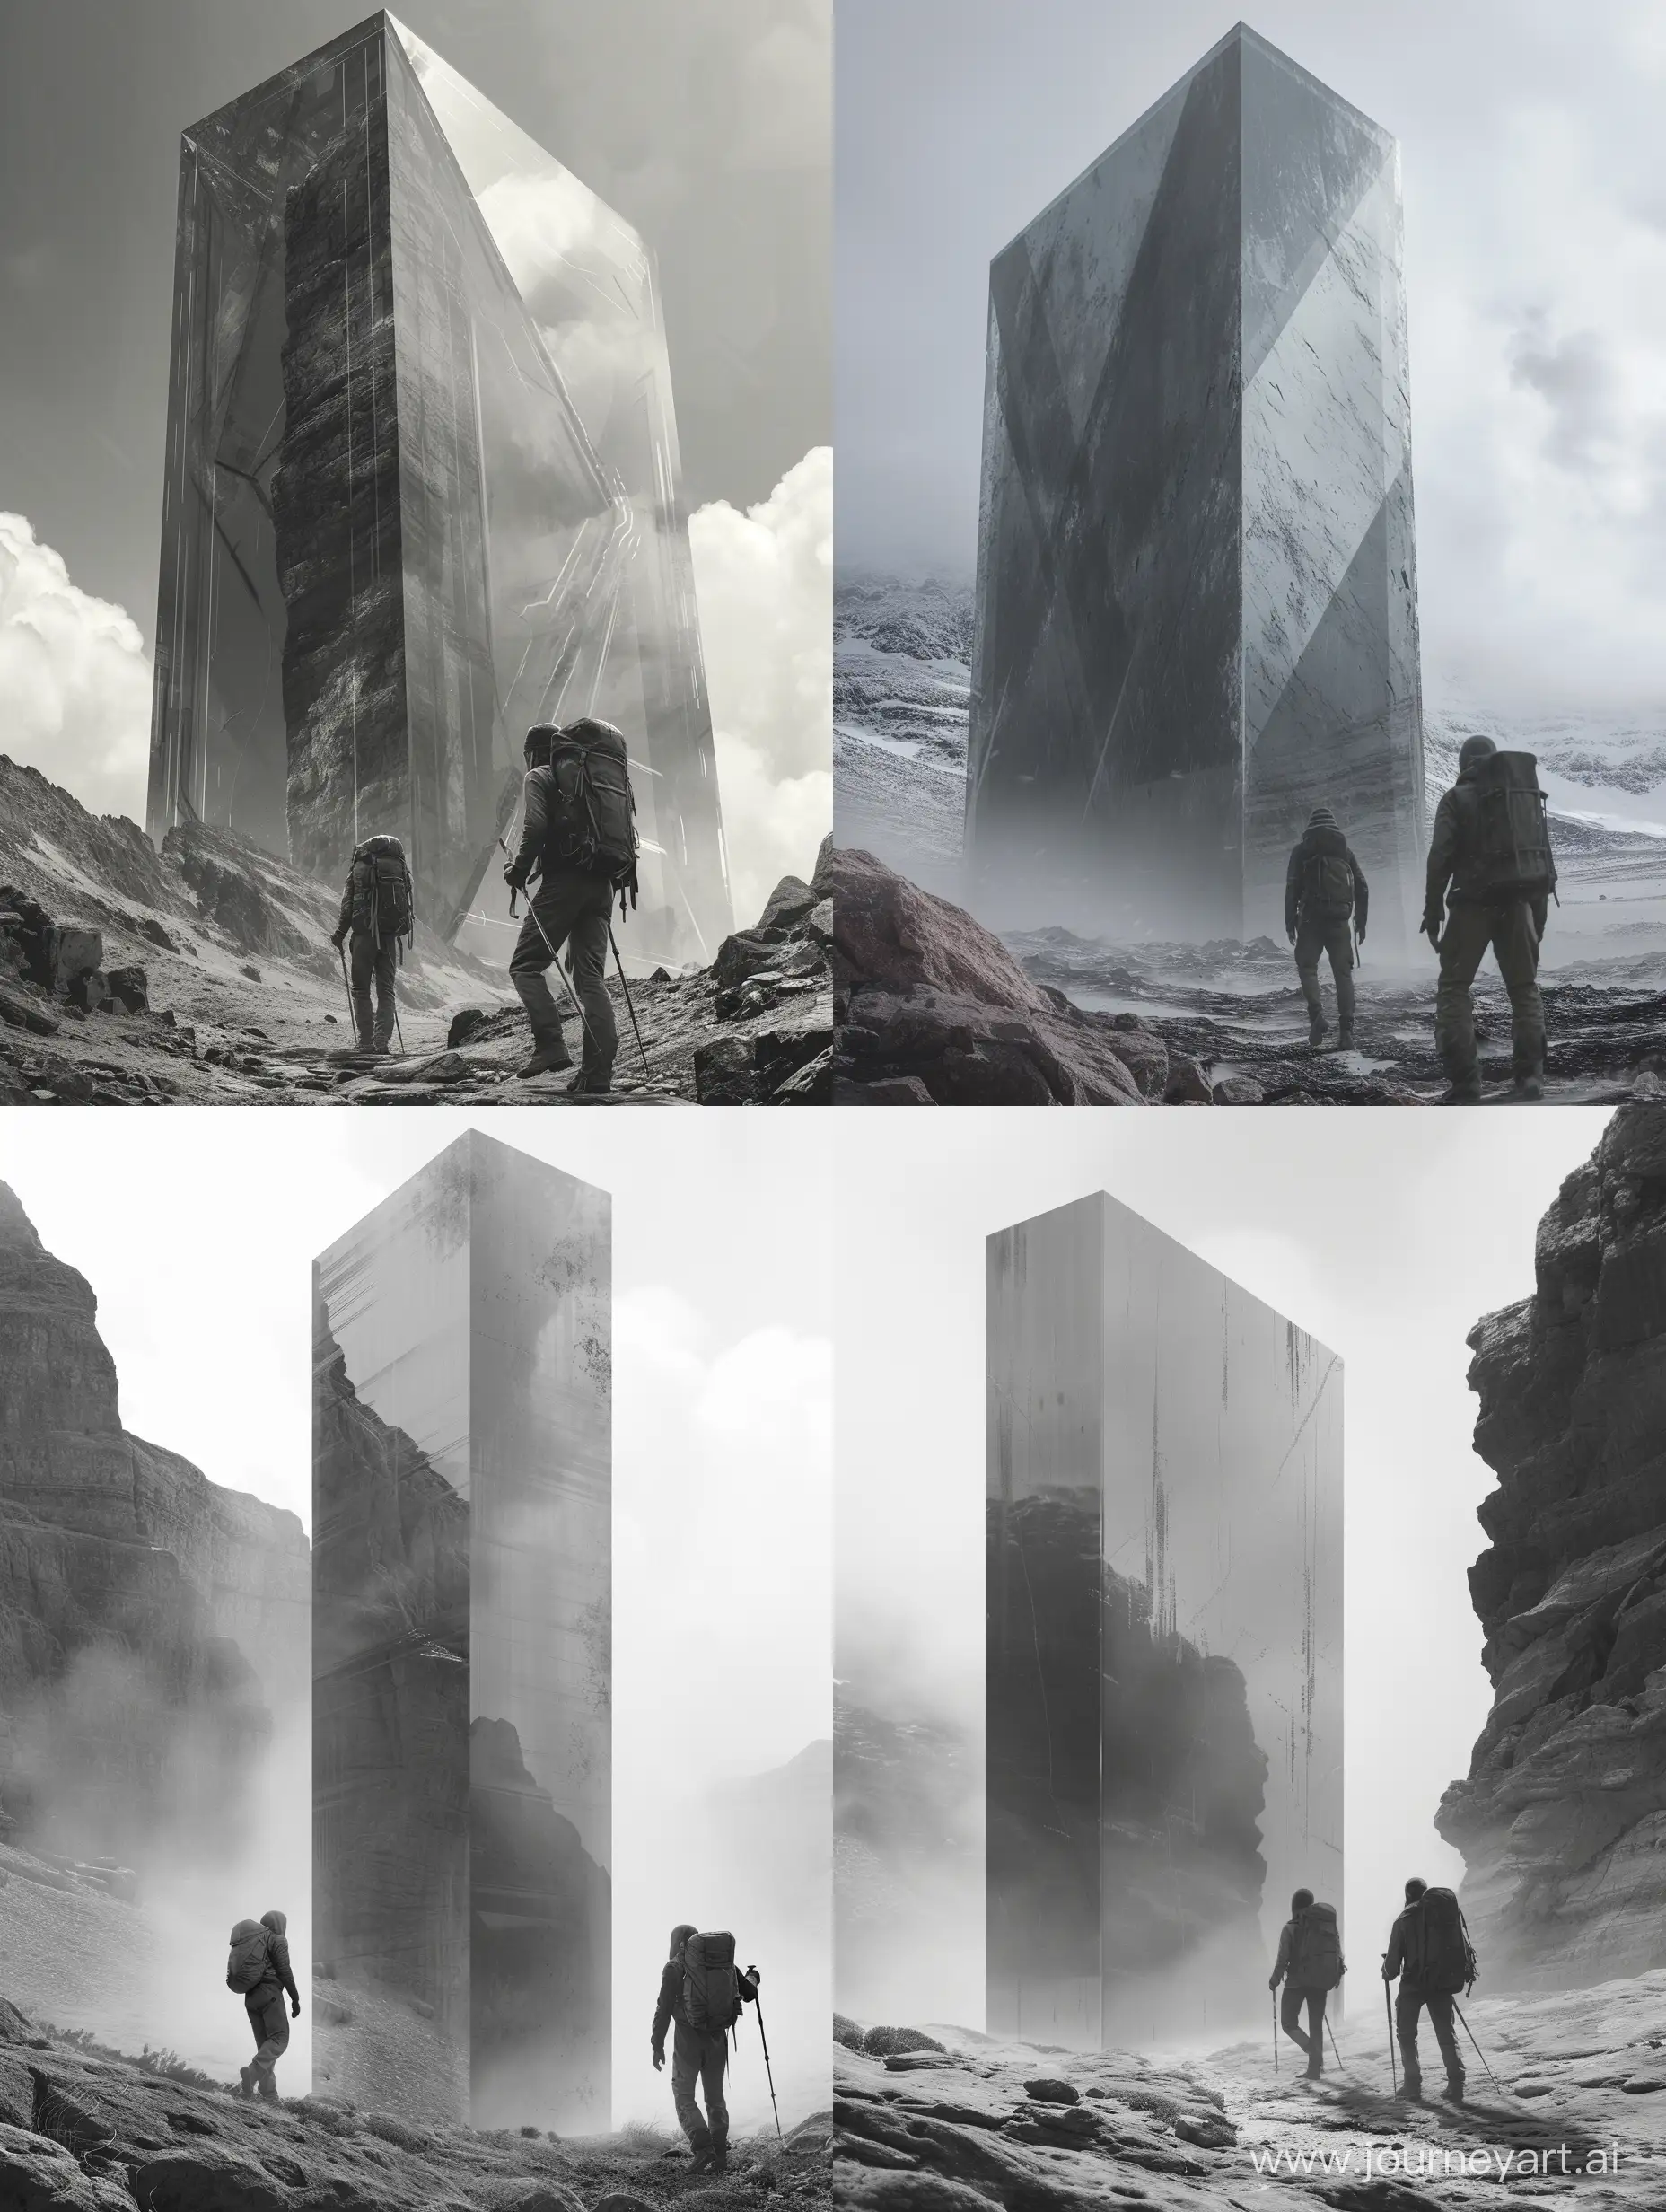 gigantic scale, two hikers approach a massive massive massive gray glass monolith, concept art, monochrome--ar 16:9